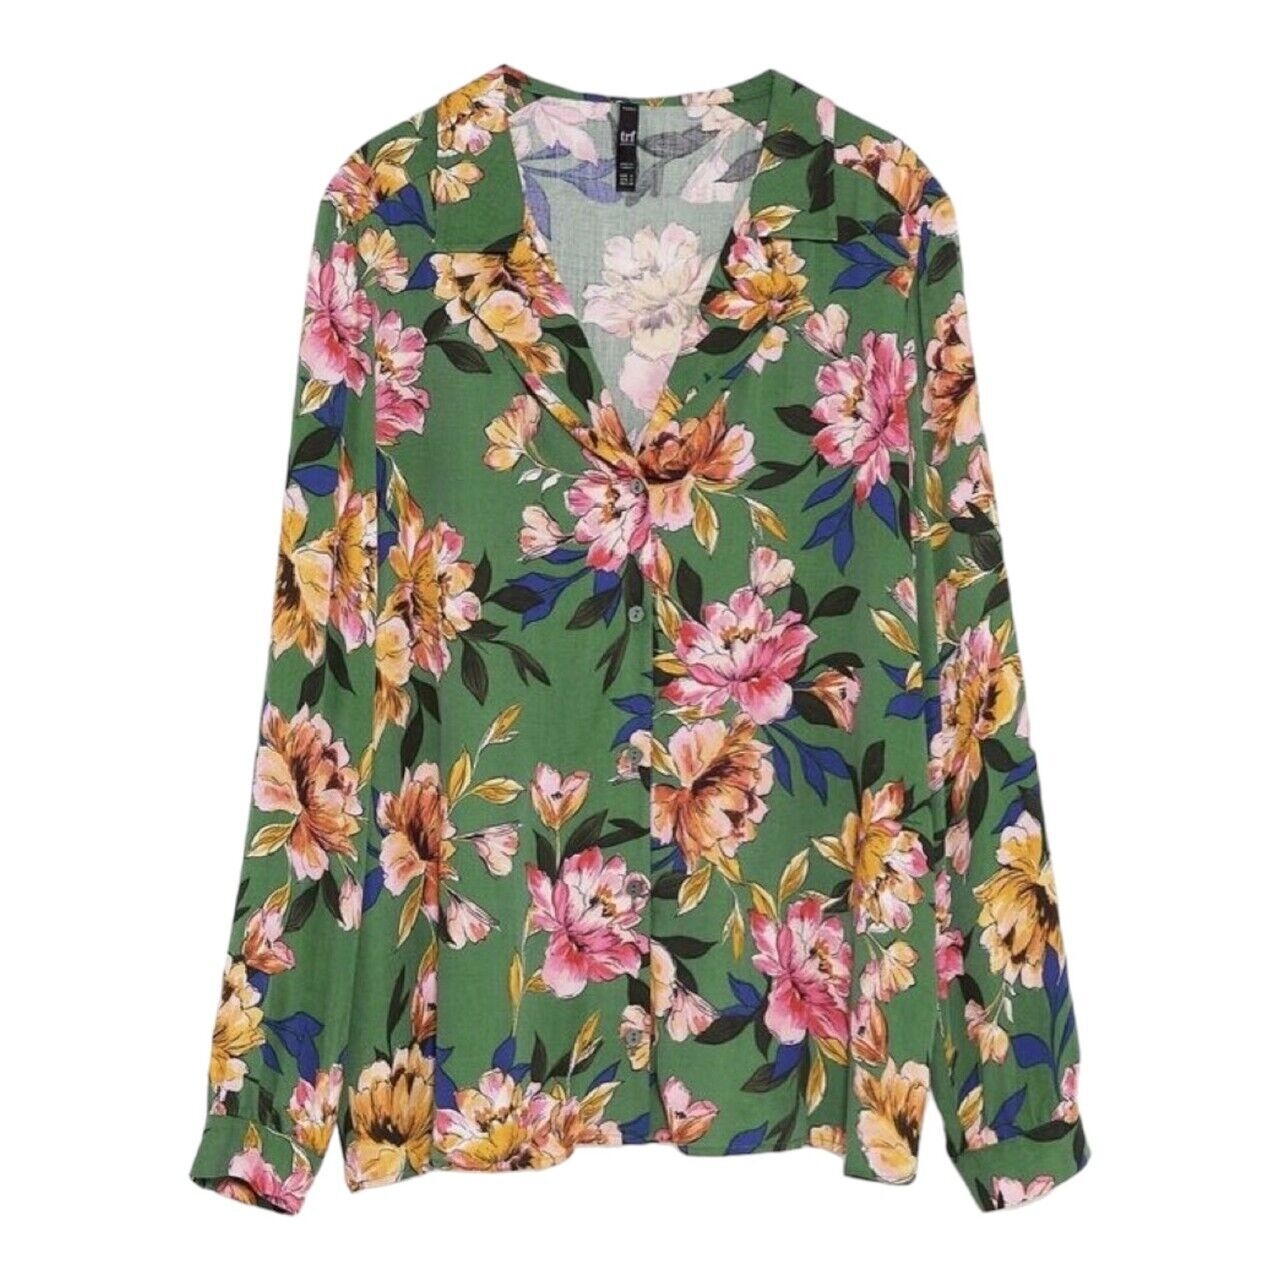 Zara Floral Printed Shirt